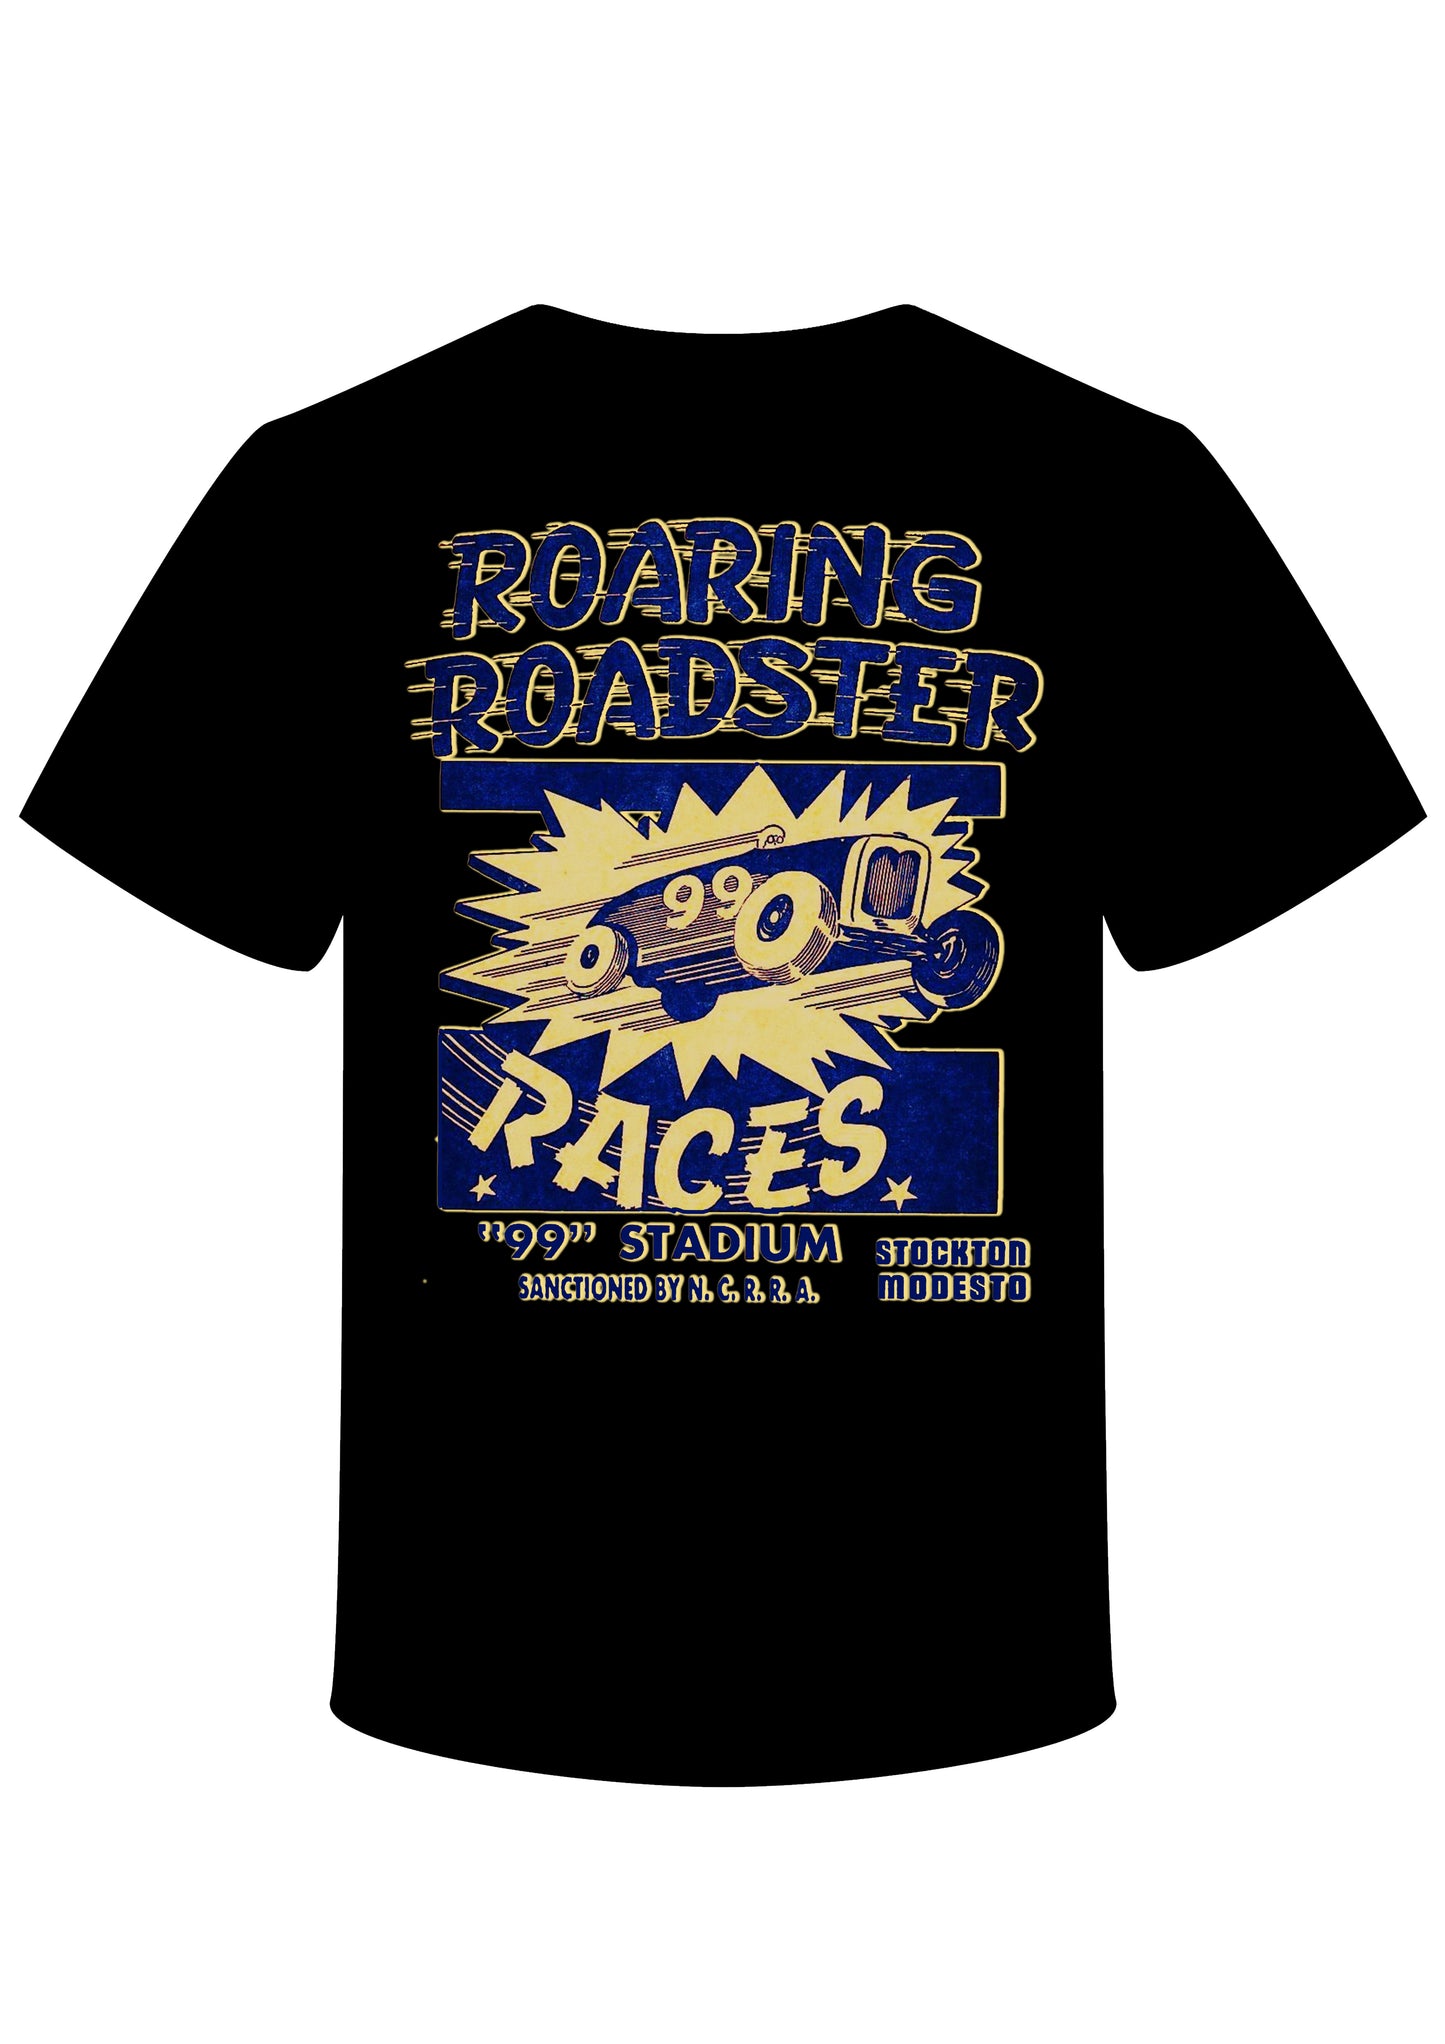 T-shirt " Roaring roadster"